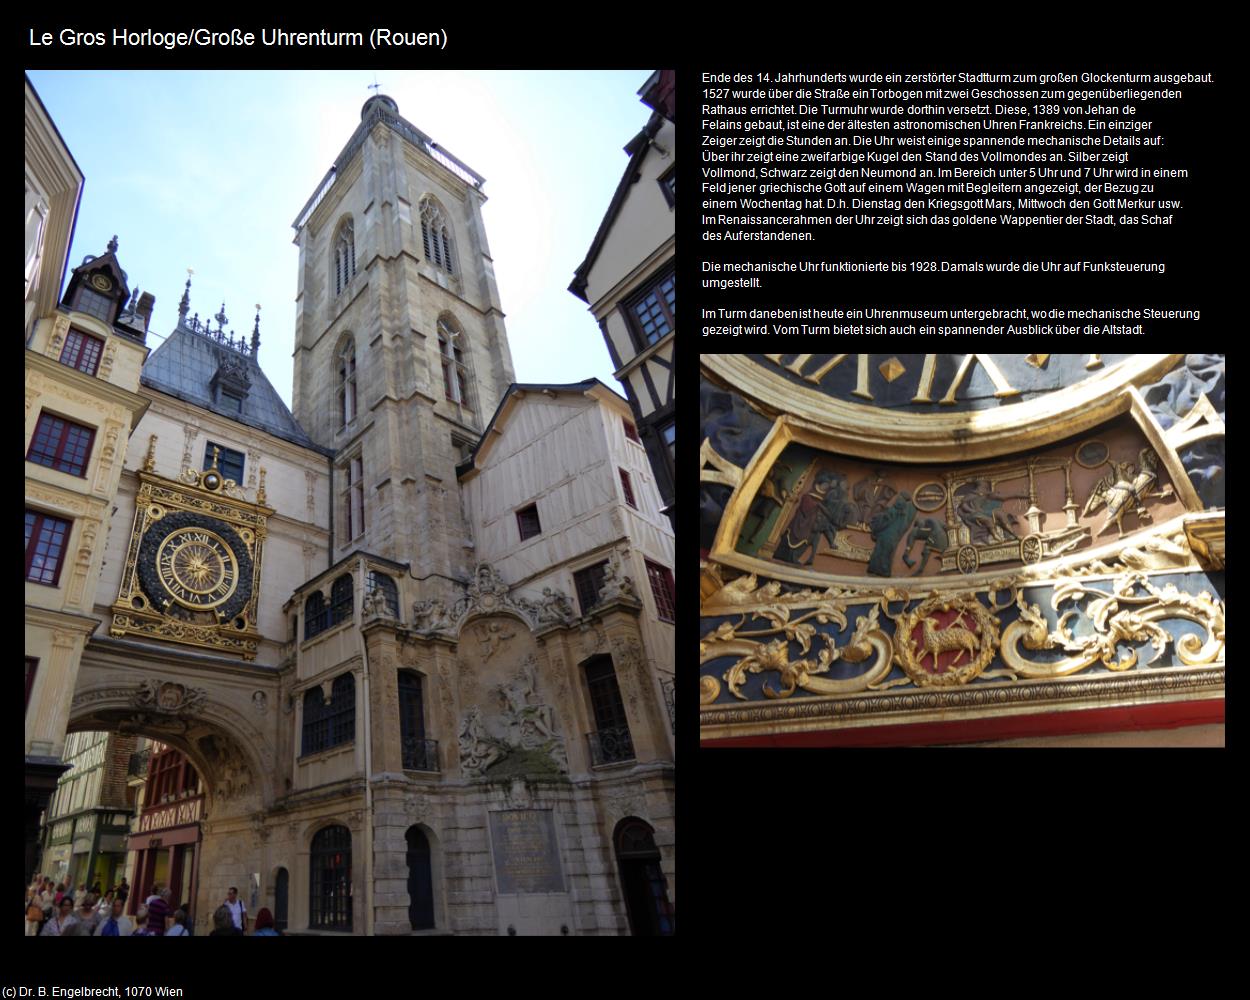 Le Gros Horloge/Große Uhrenturm (Rouen (FR-NOR)) in Kulturatlas-FRANKREICH